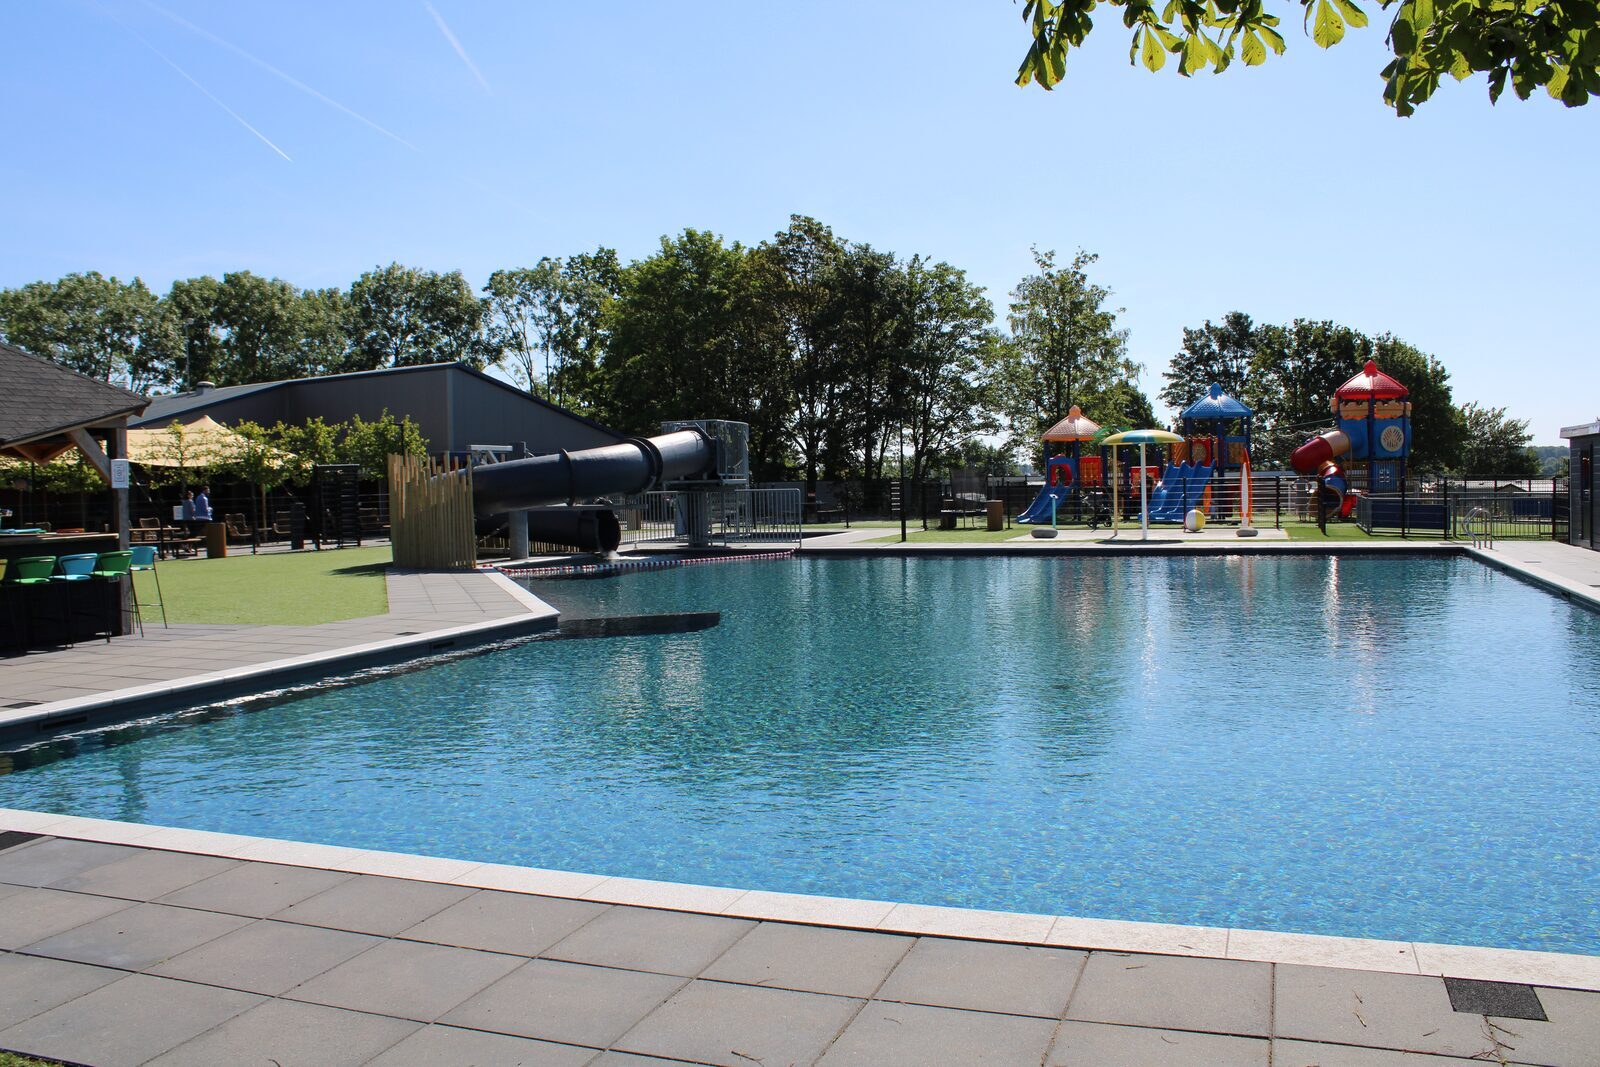 Campsite Gelderland with swimming pool